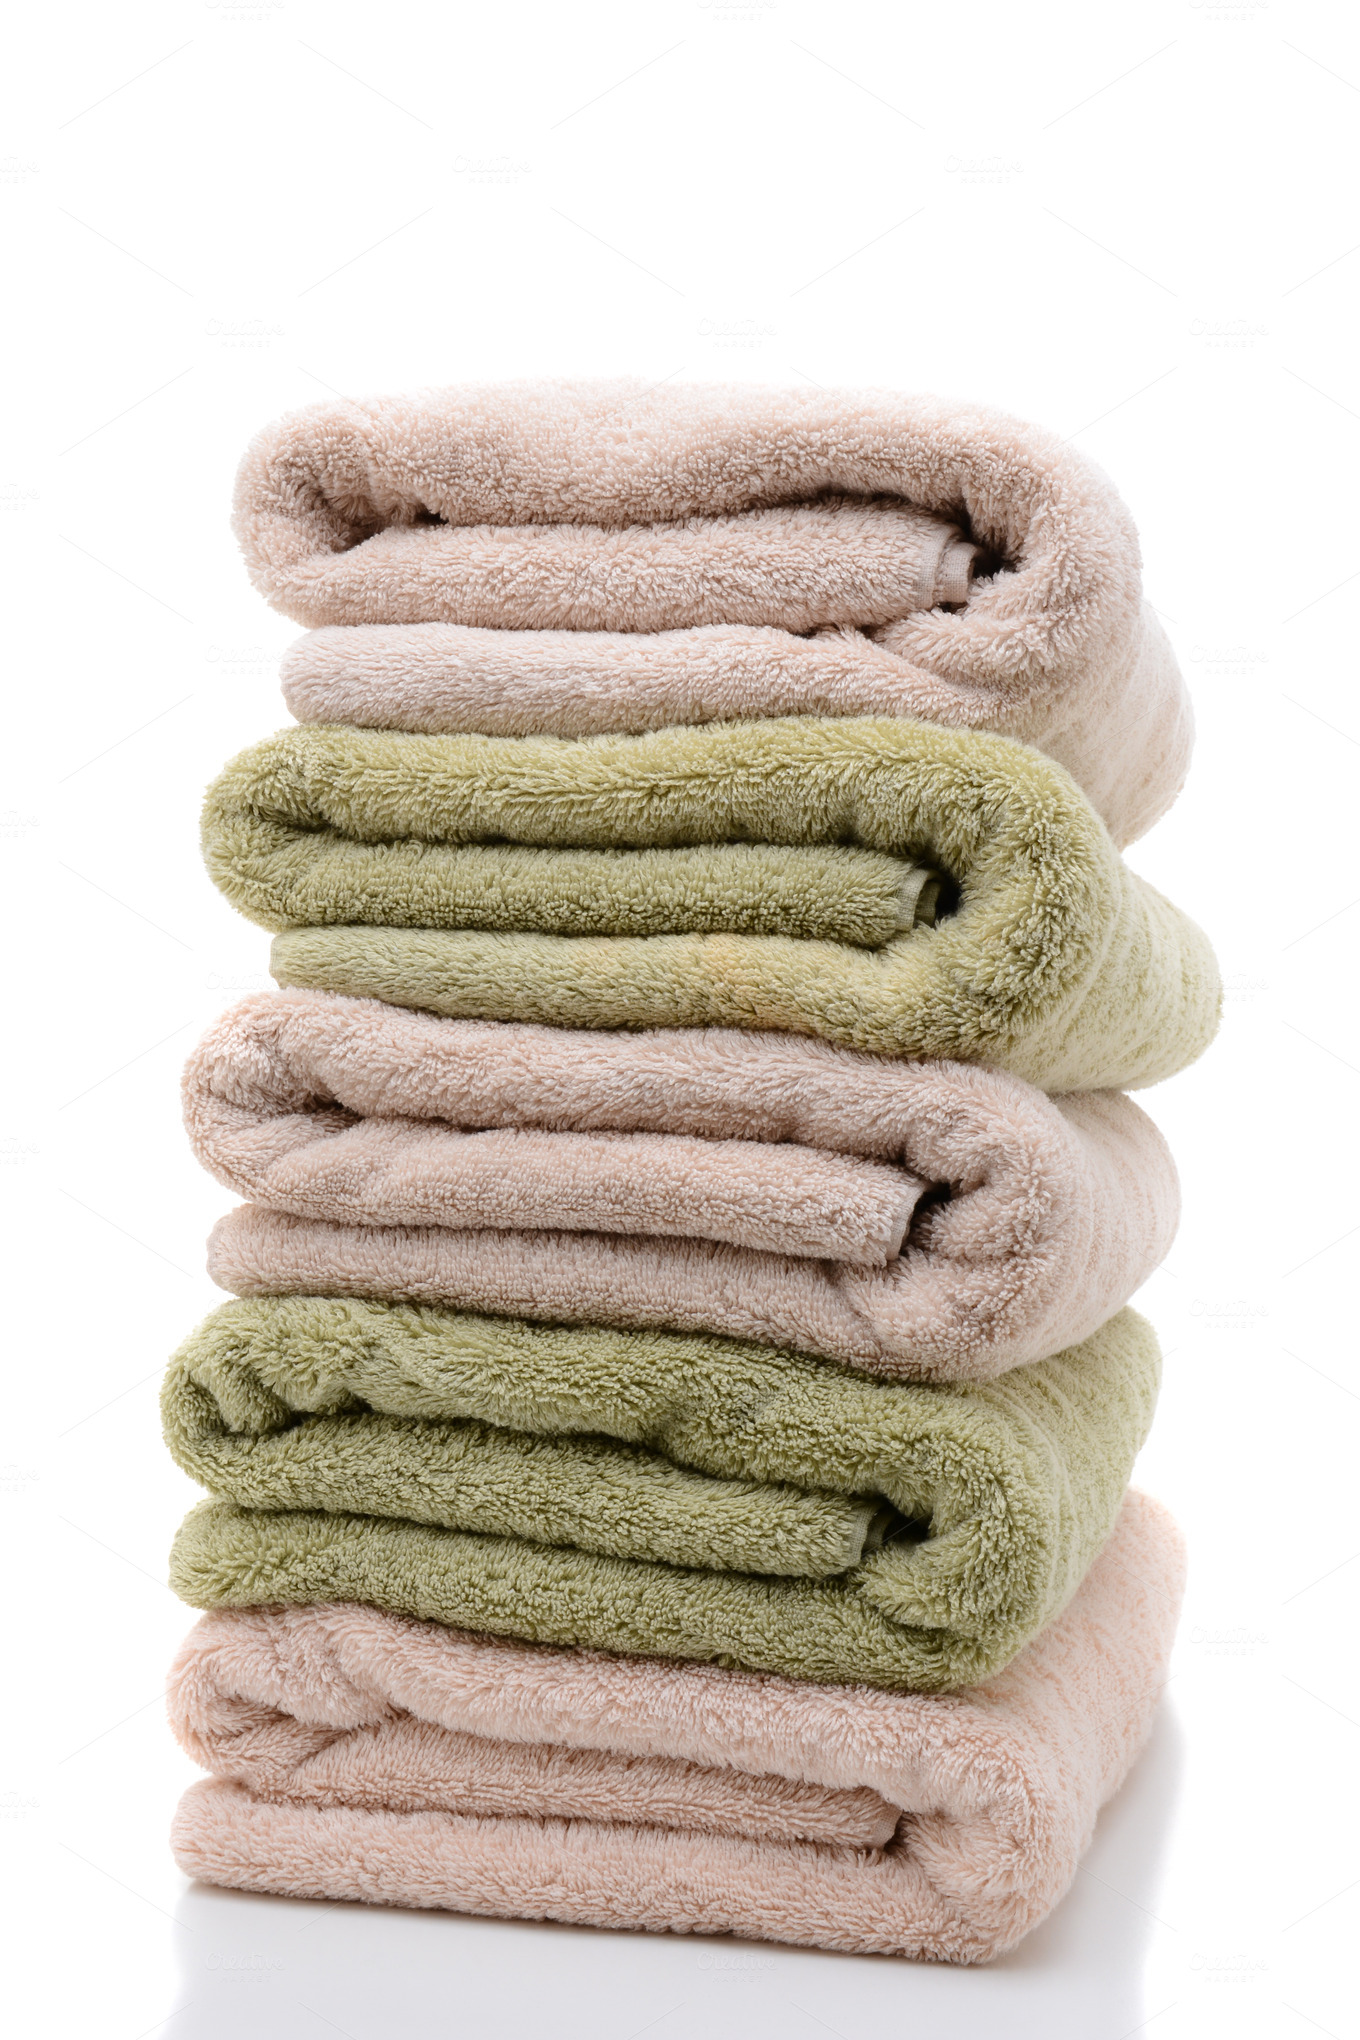 A Stack of Bath Towels Neatly Folded Beauty & Fashion